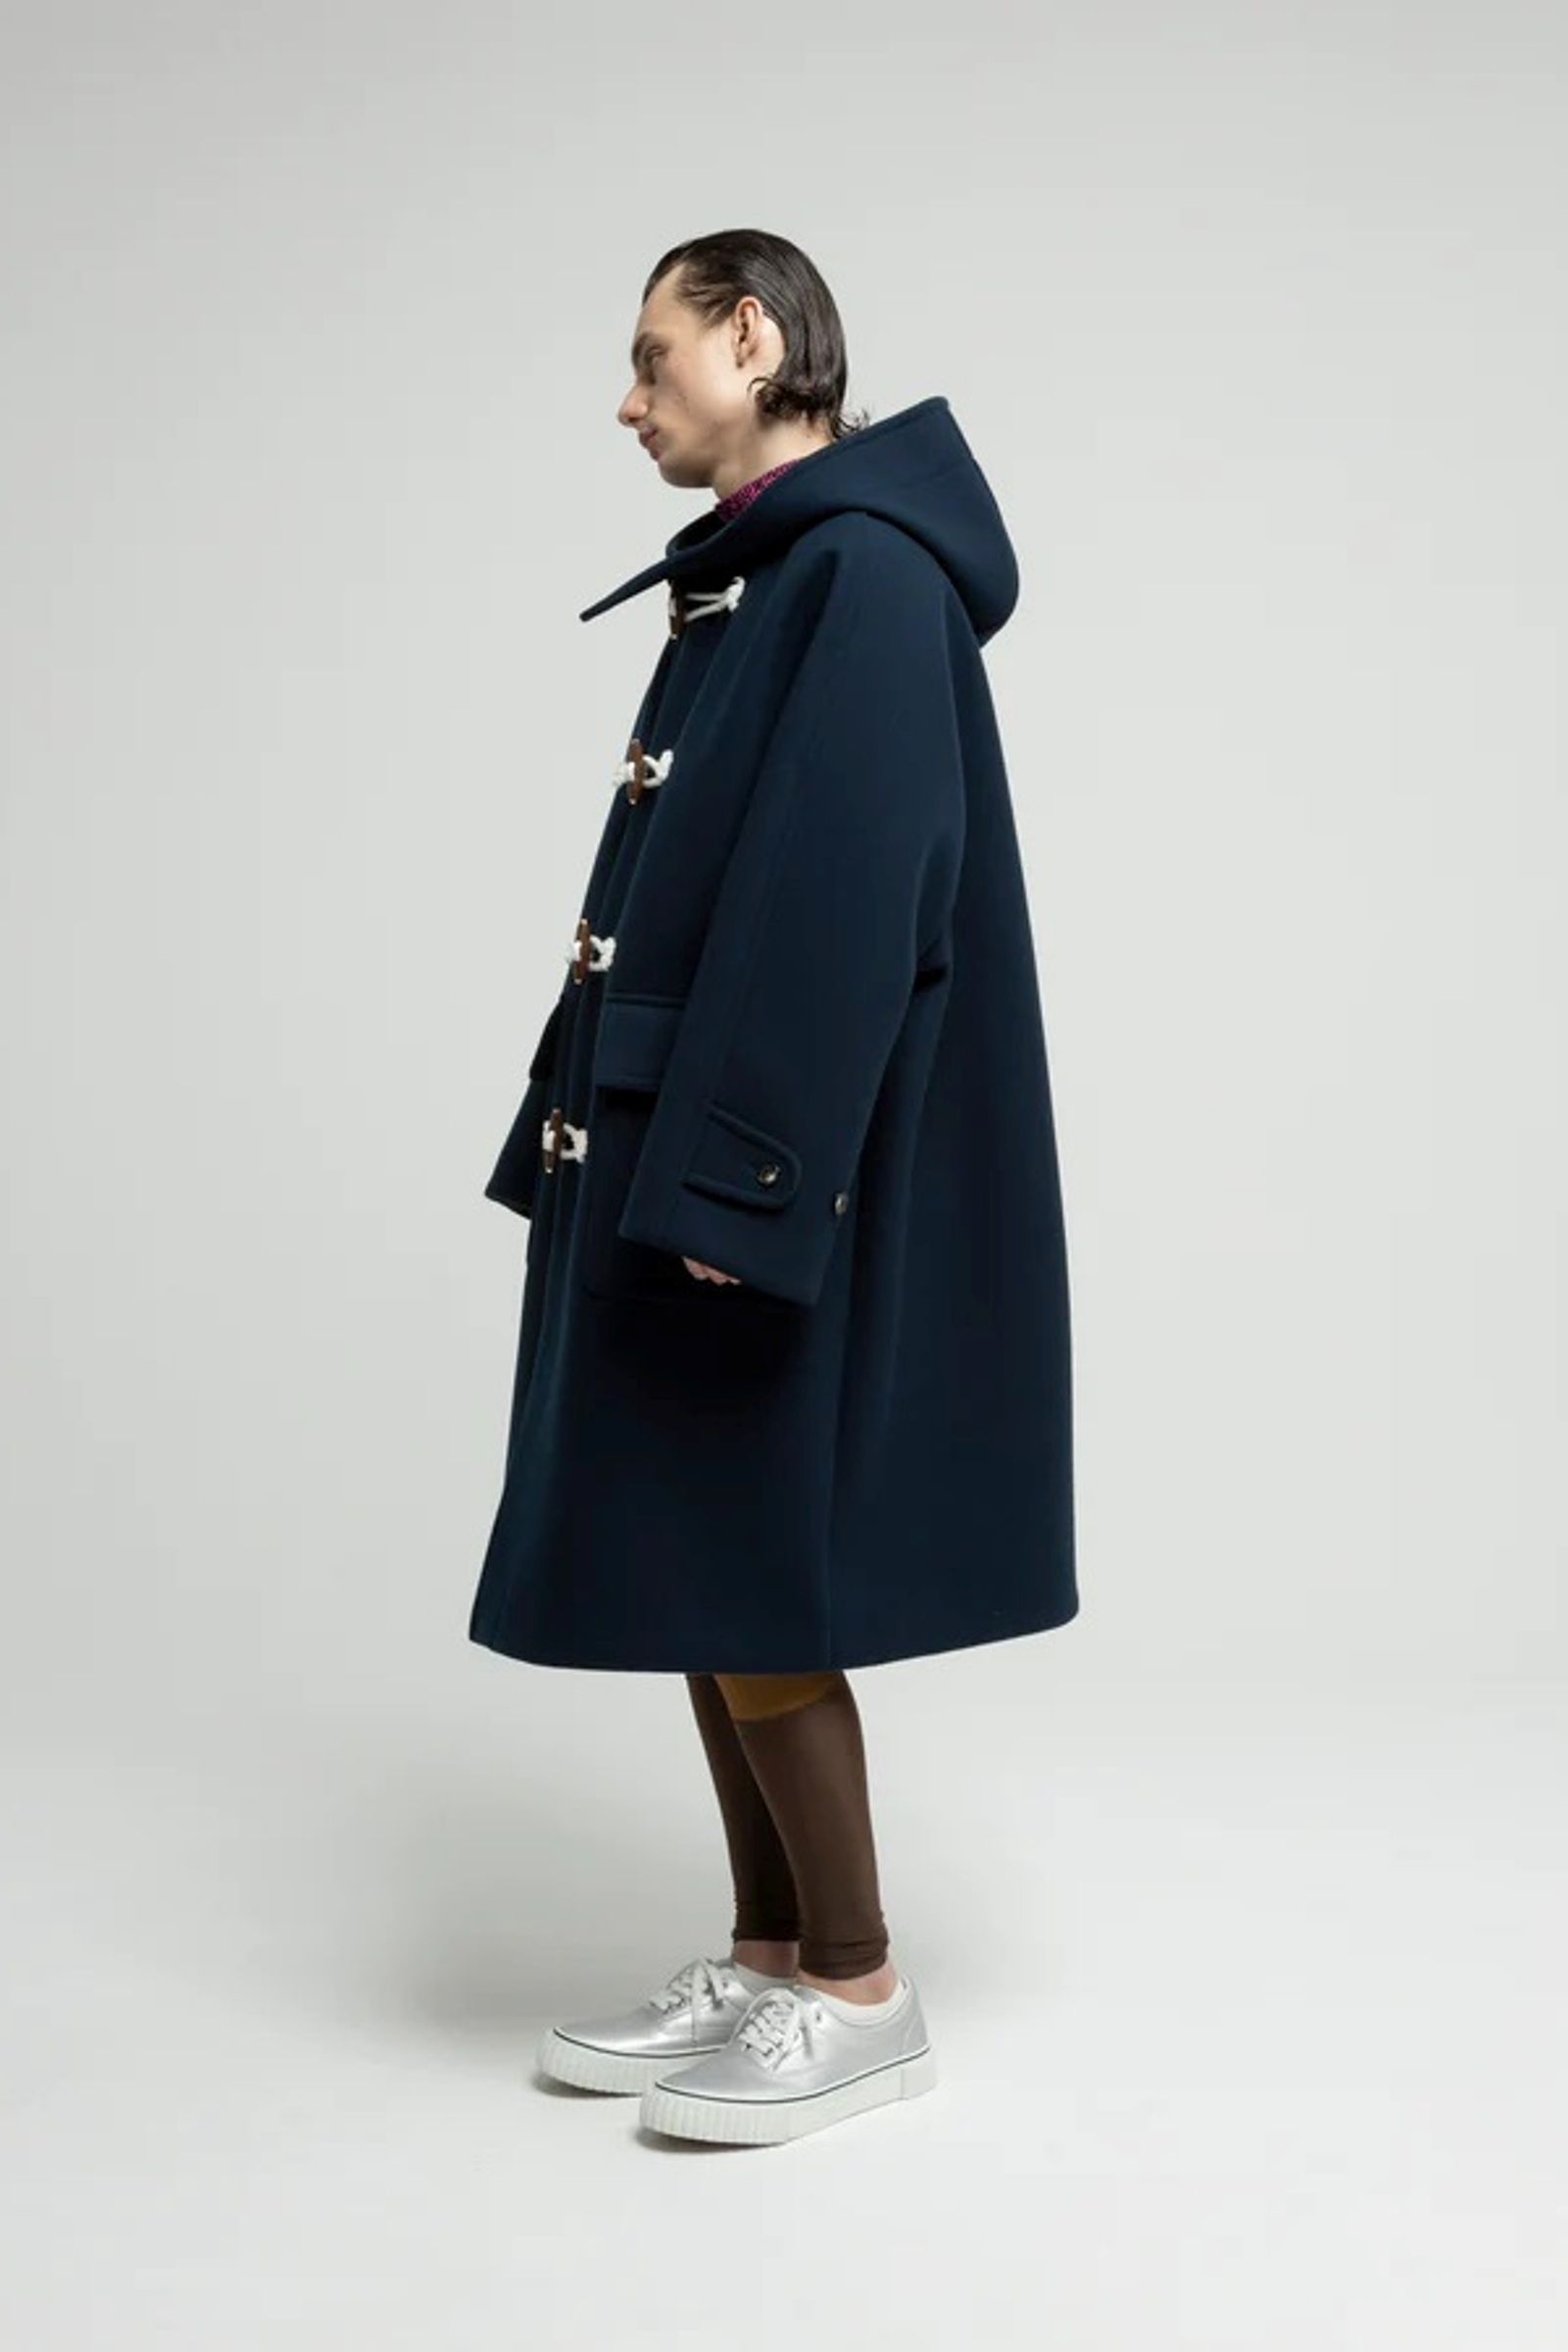 FUMITO GANRYU - vintage modern duffle coat -navy- 22aw | asterisk